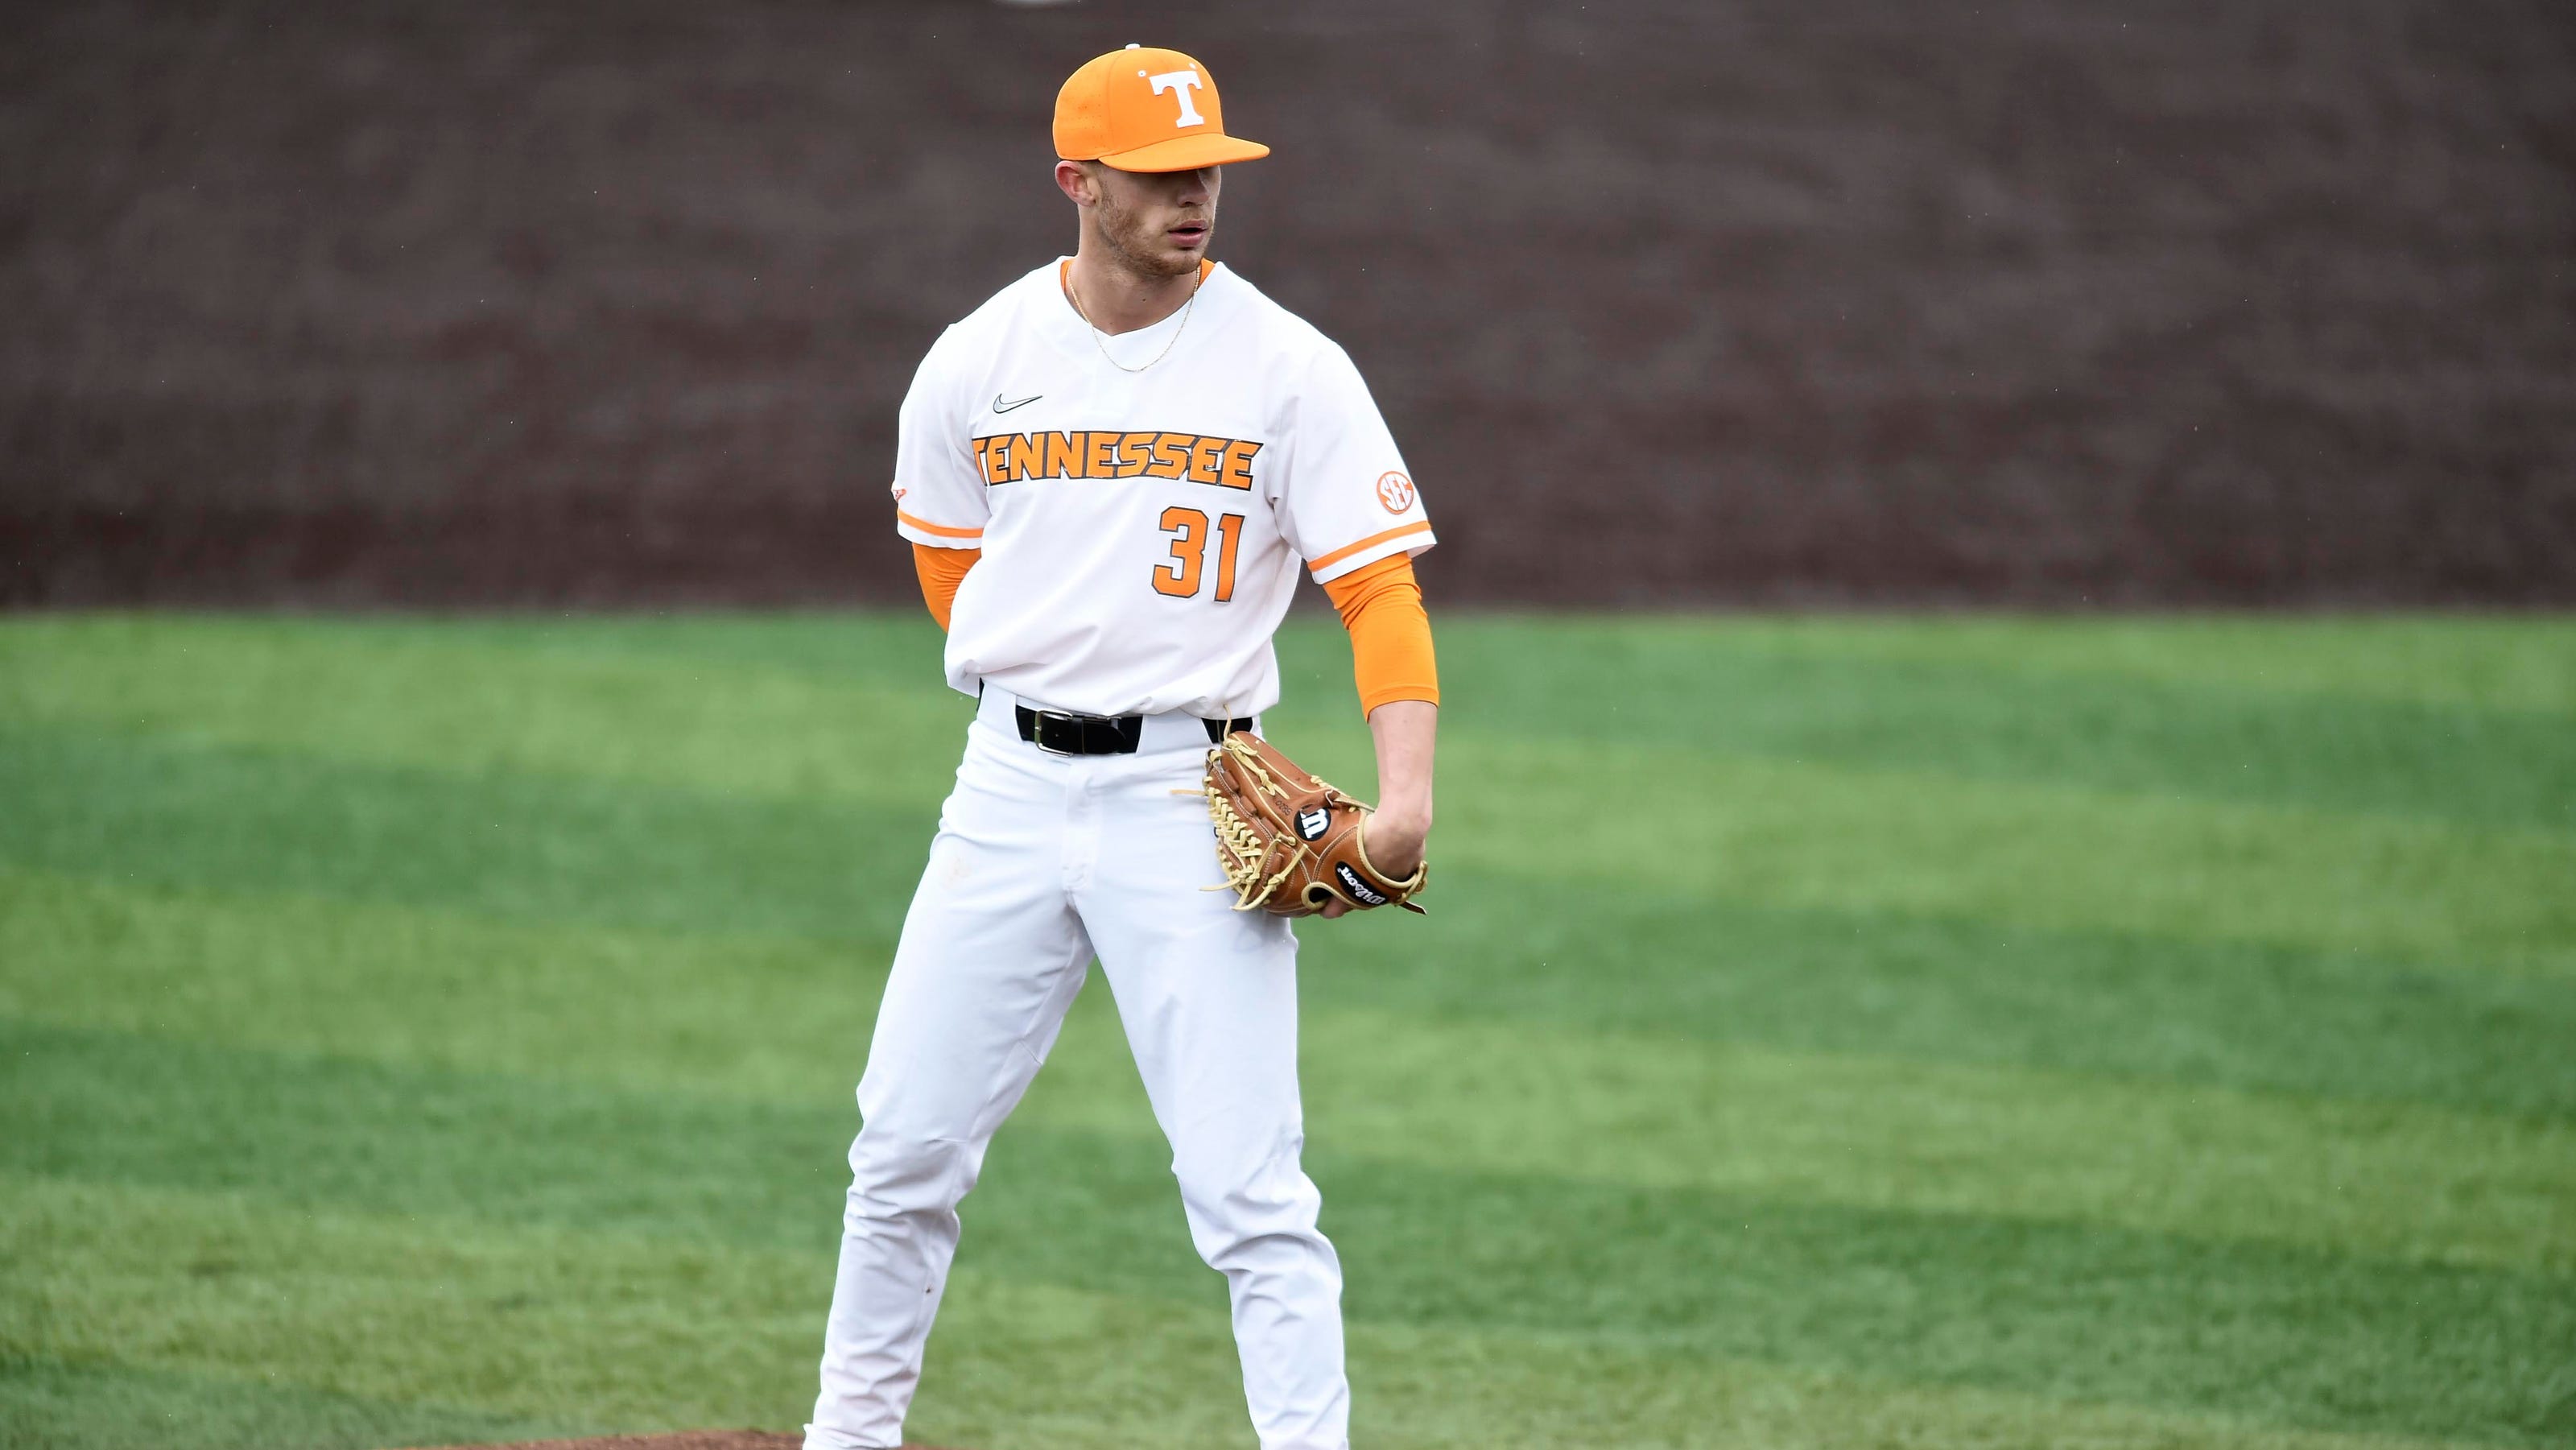 Jackson Leath on Tennessee baseball, injury and MLB Draft prospects